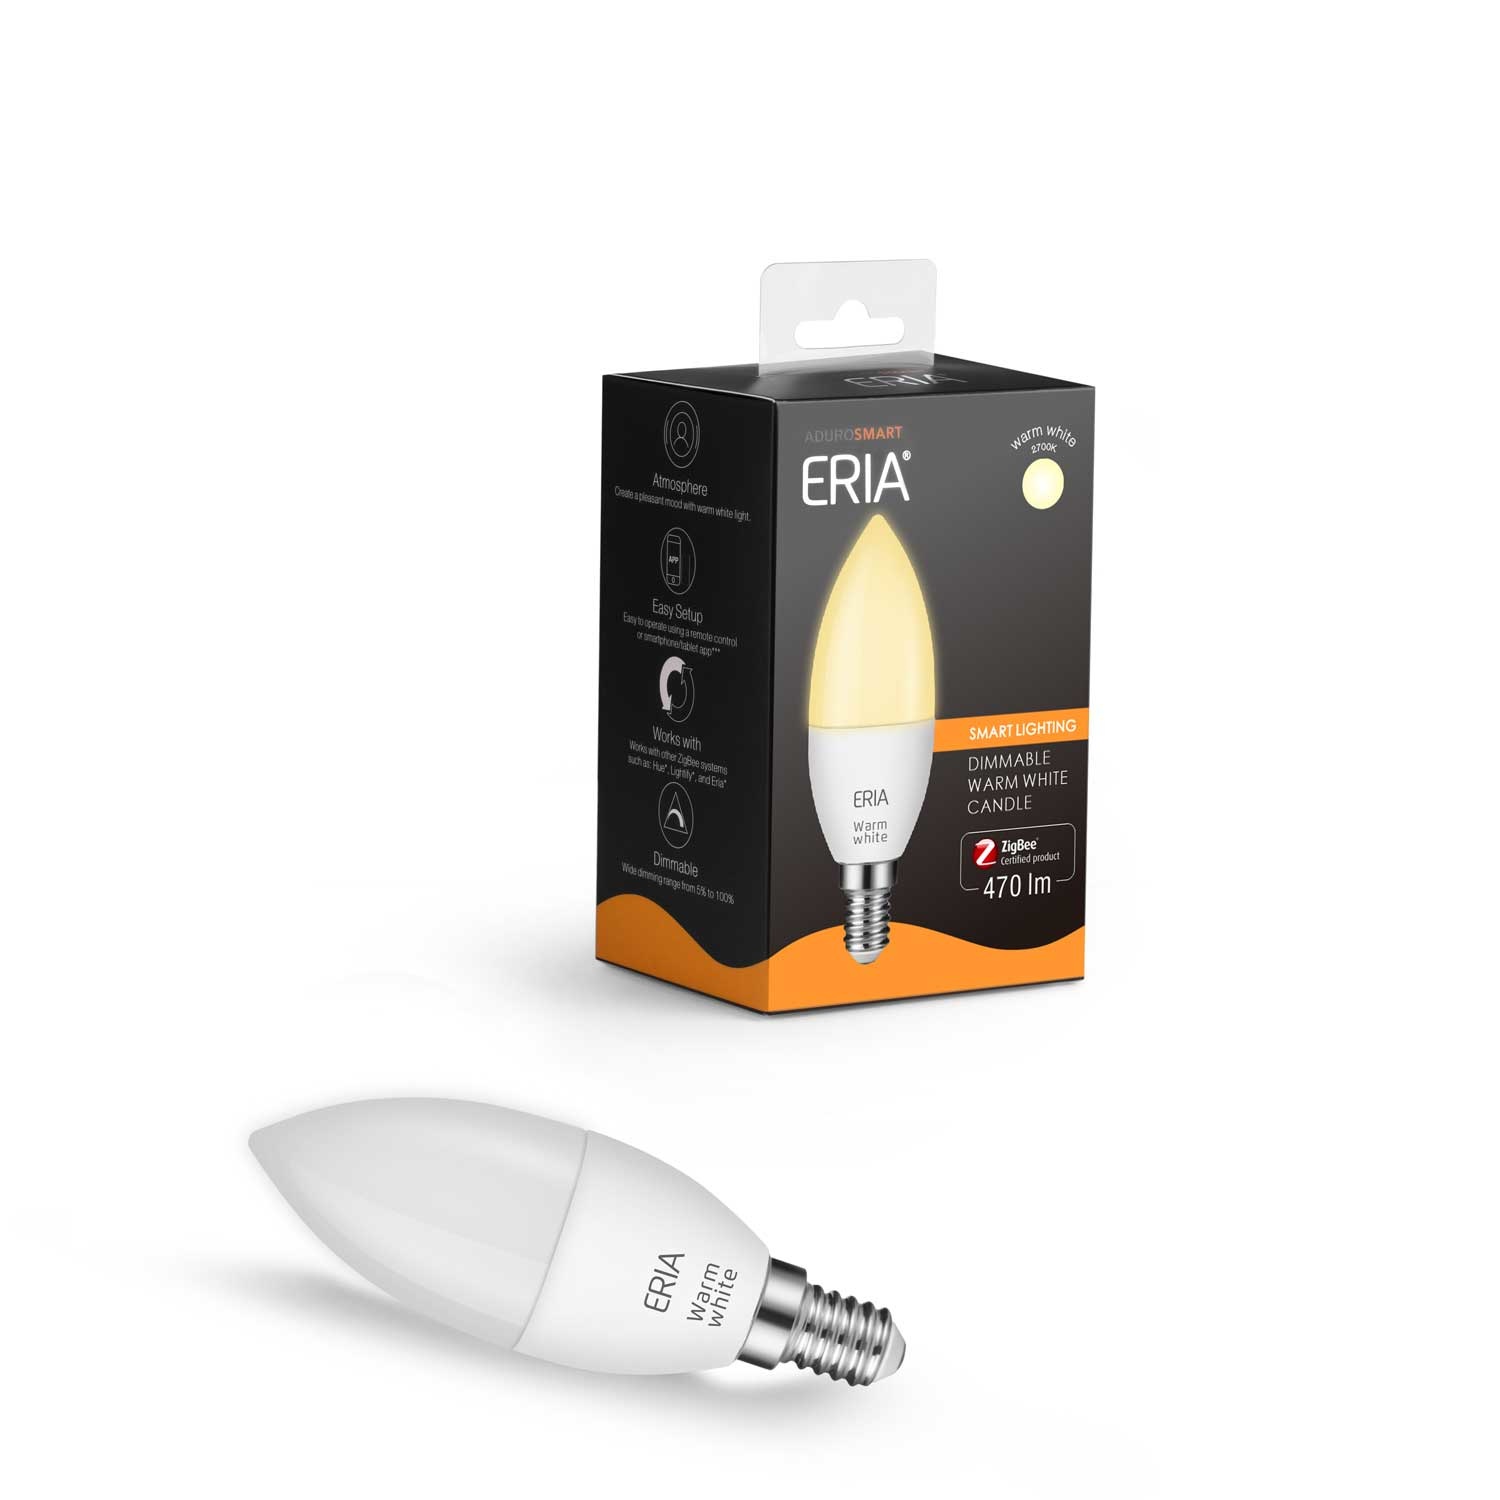 AduroSmart ERIA® E14 kaars Warm white - 2700K - warm wit licht - Zigbee Smart Lamp - werkt met o.a. Adurosmart, Hue en Google Home